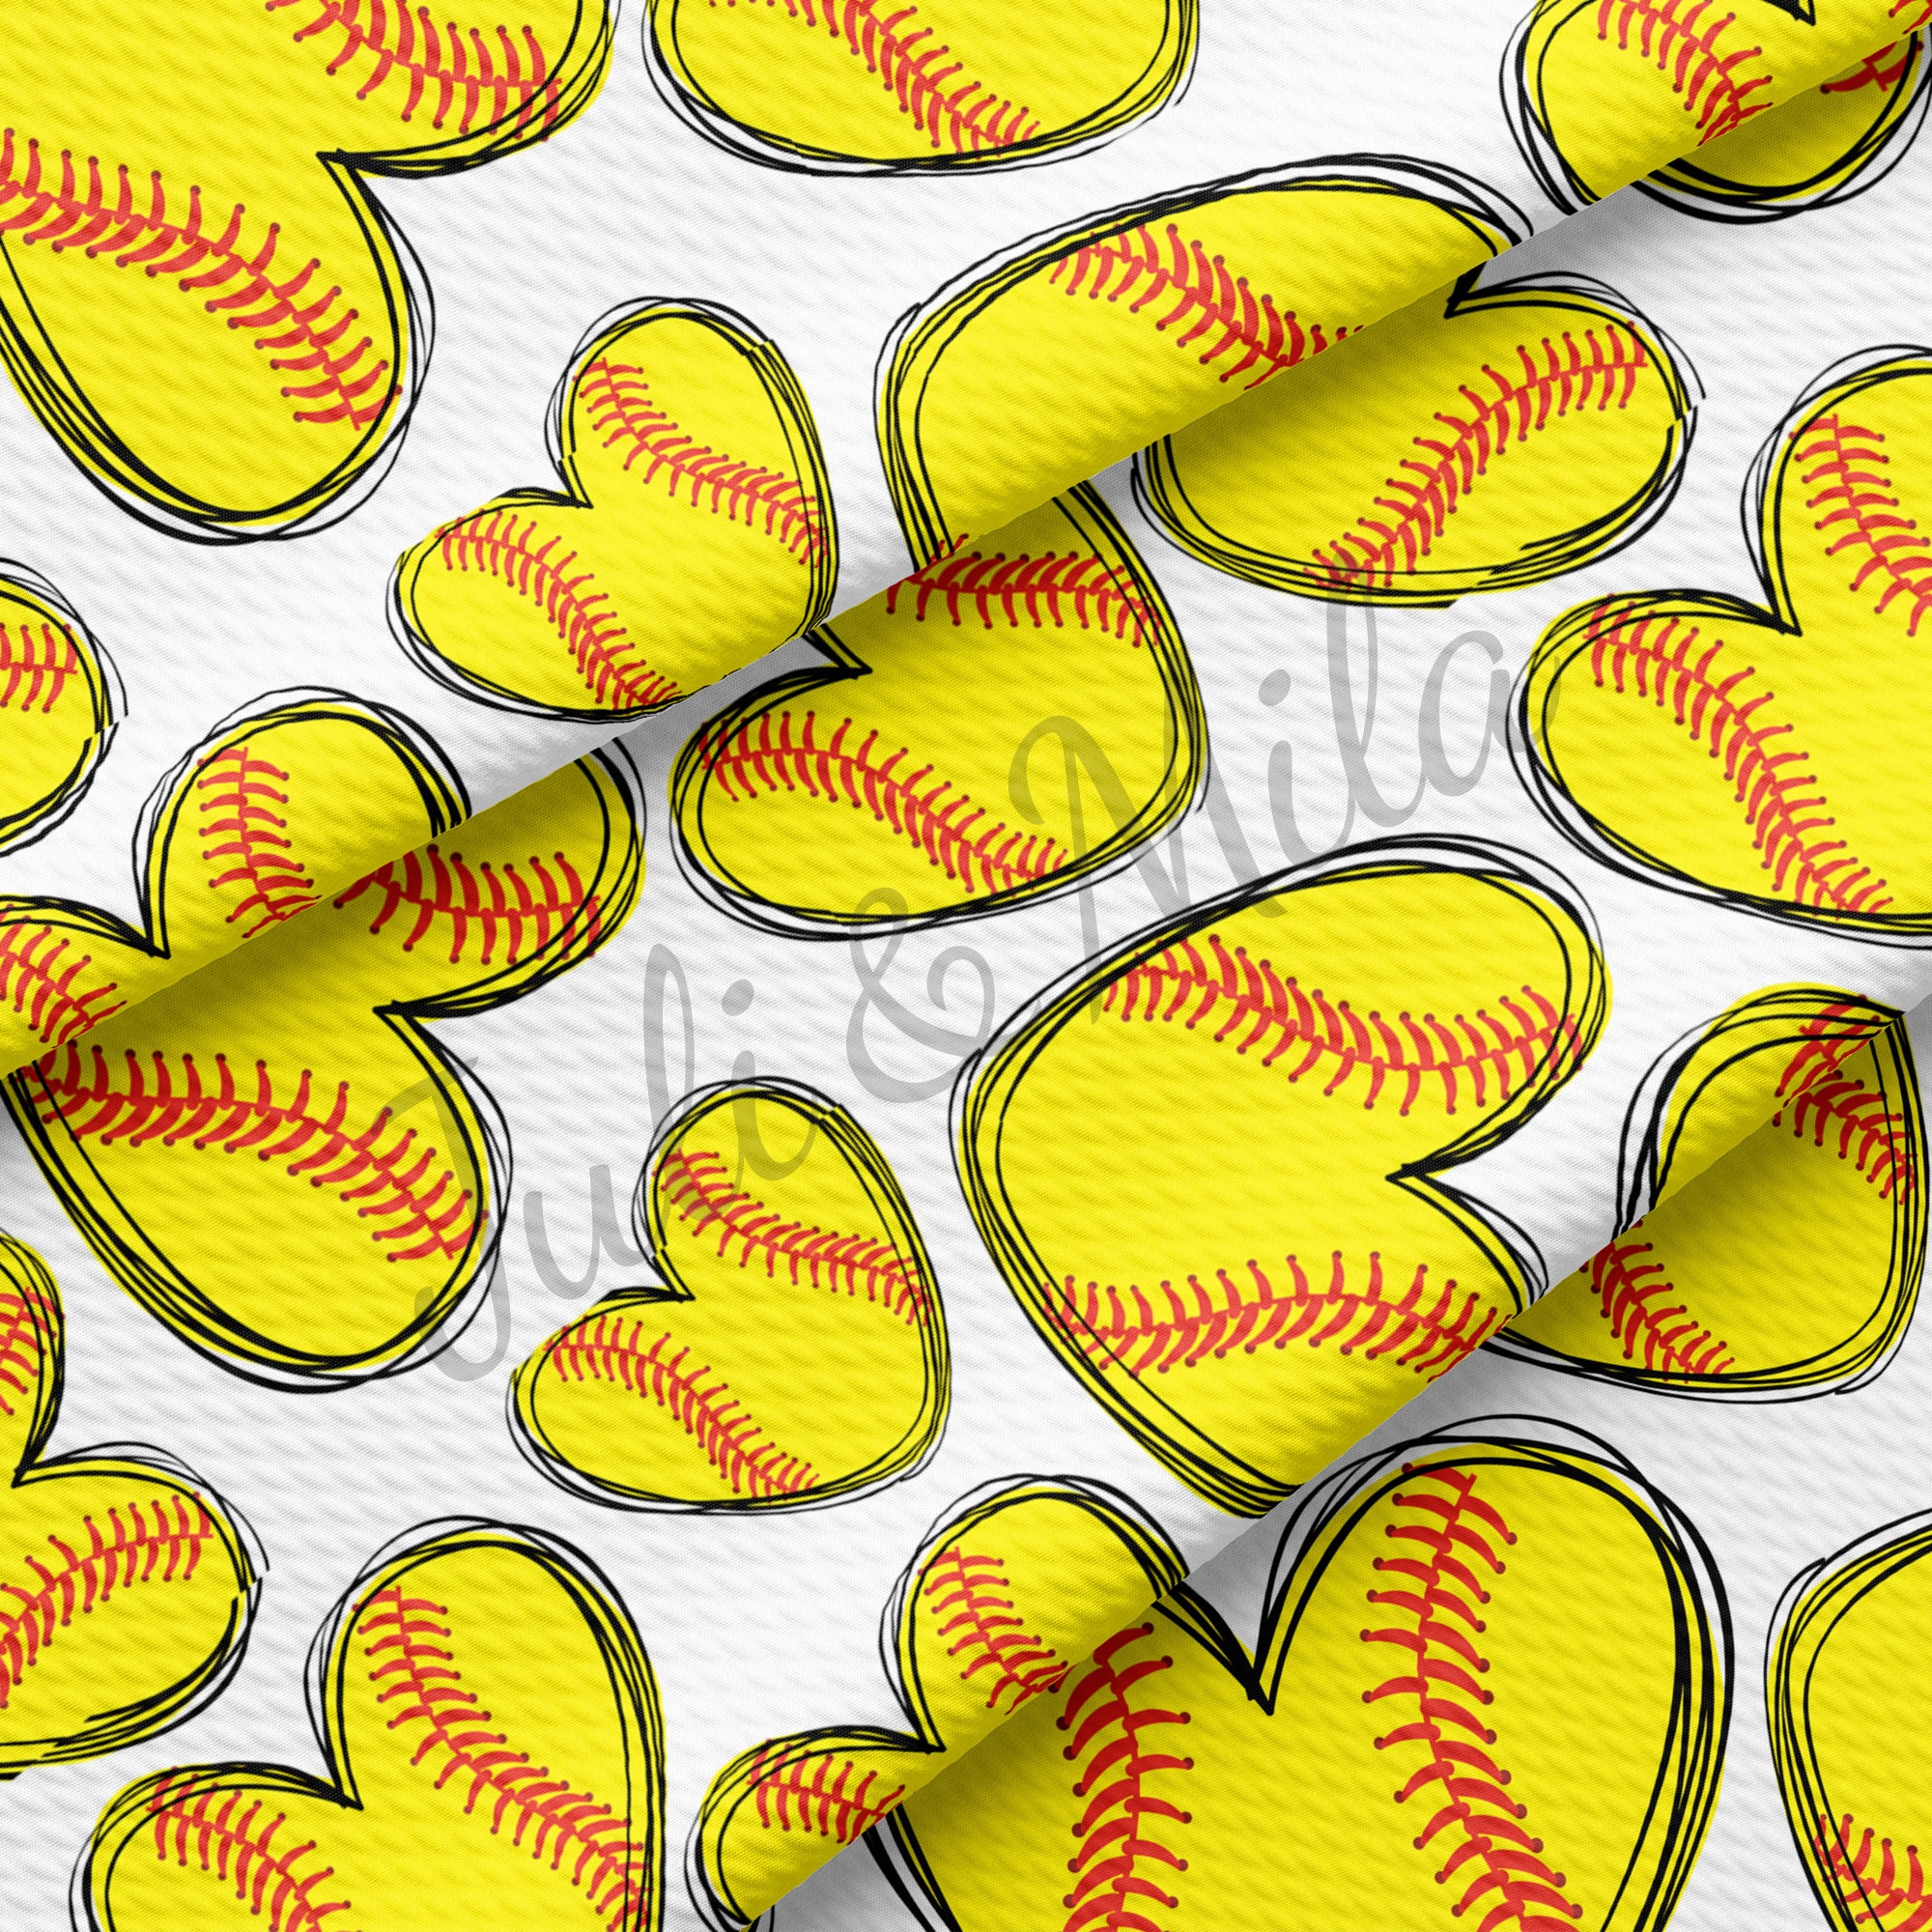 1.5 Softballs ribbon wired, 10 yard roll satin yellow softball on white  satin ribbon, wired ribbon, sports softball 1.5 inch ribbon